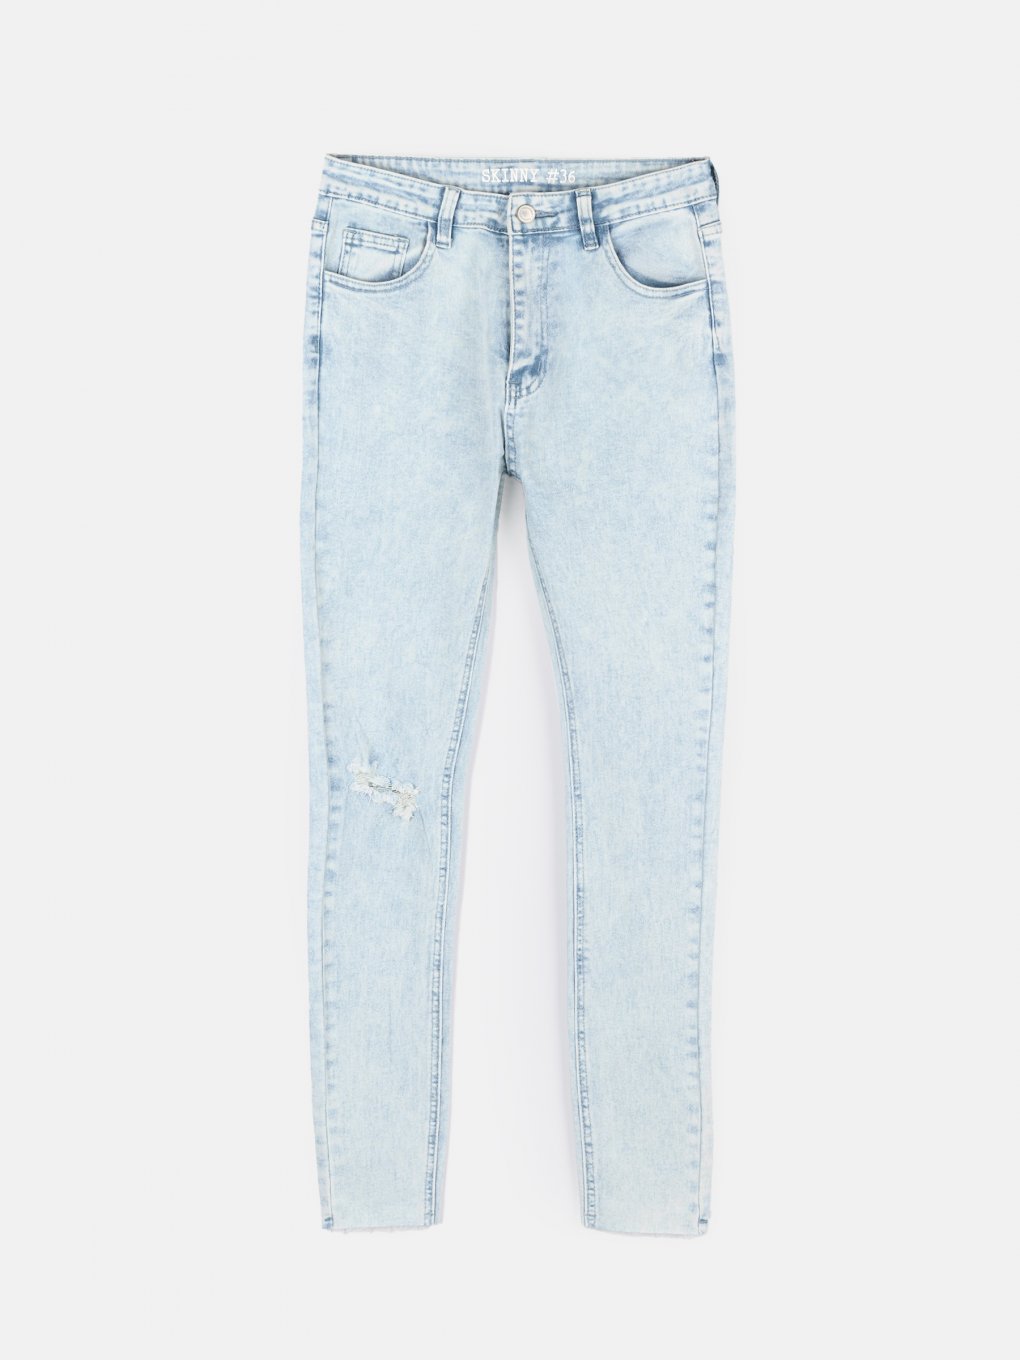 Distressed skinny jeans